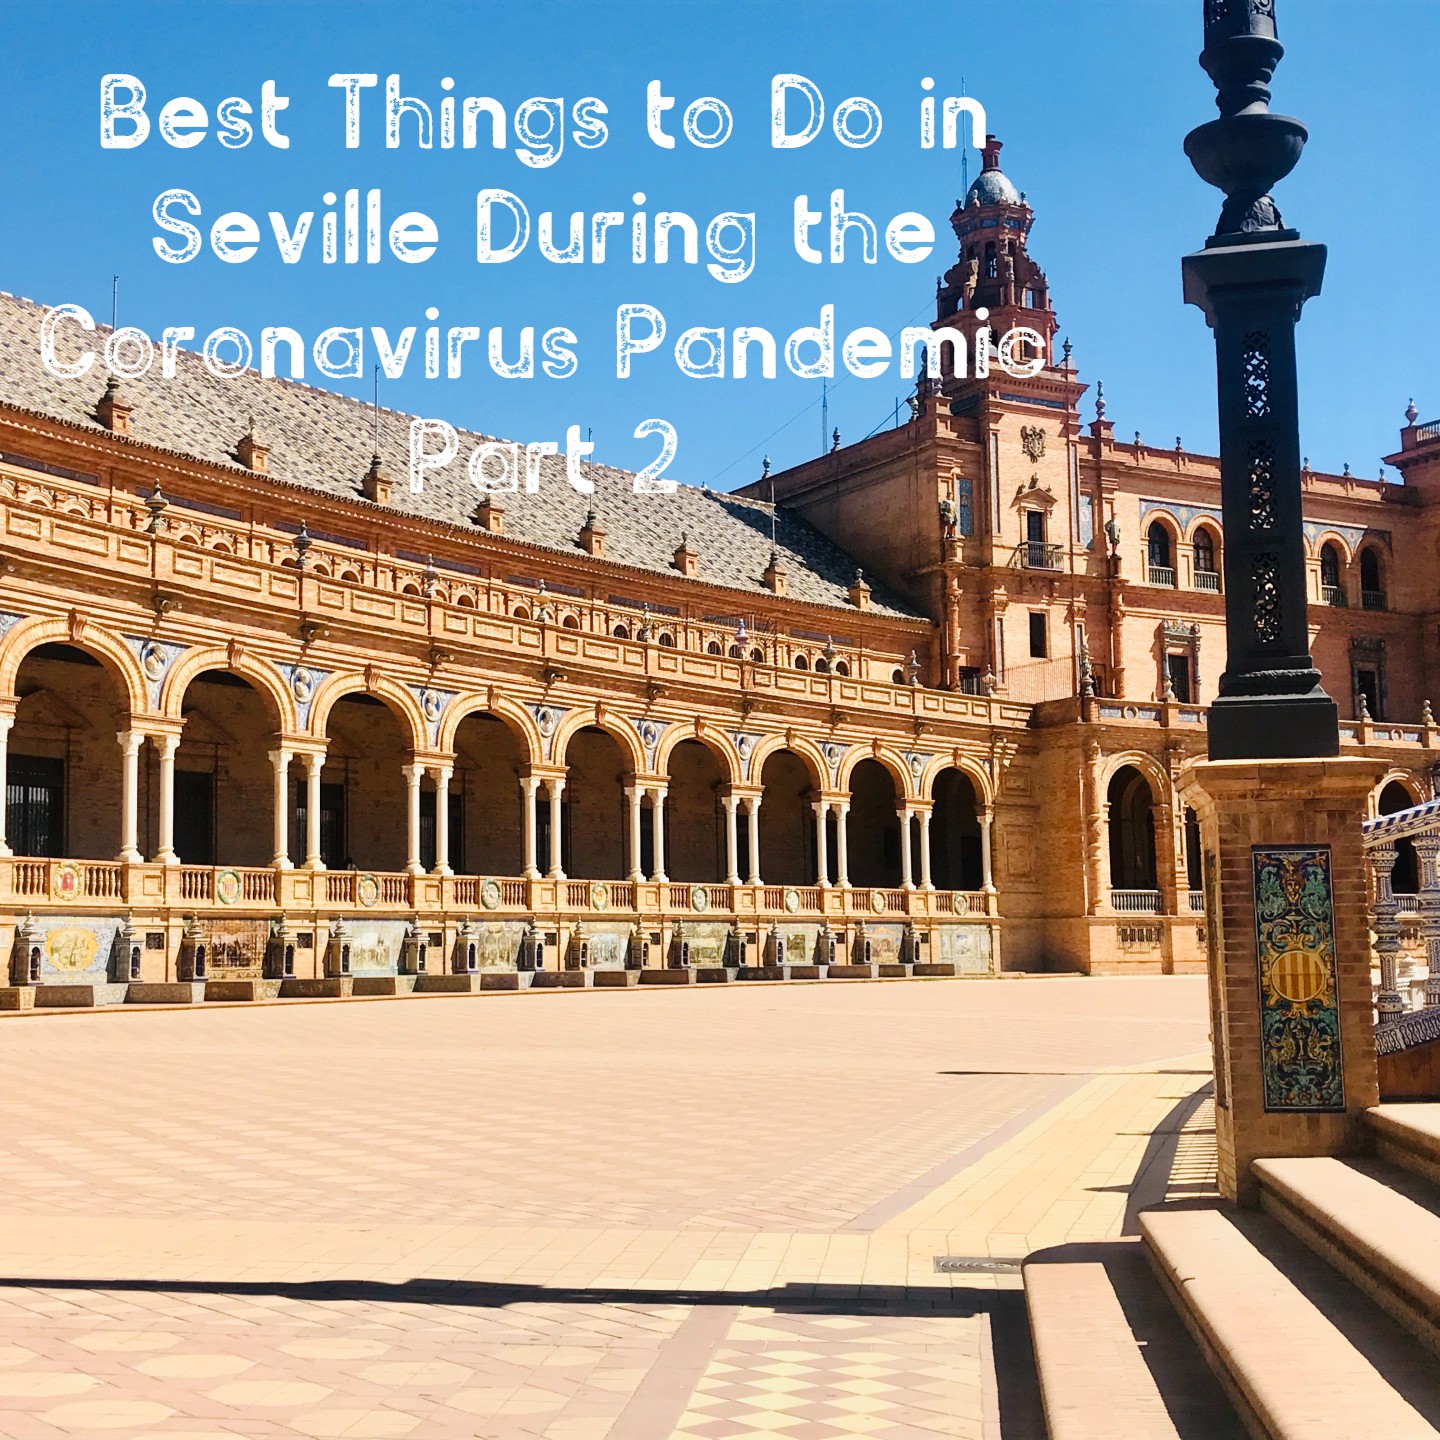 Walking tours in Seville